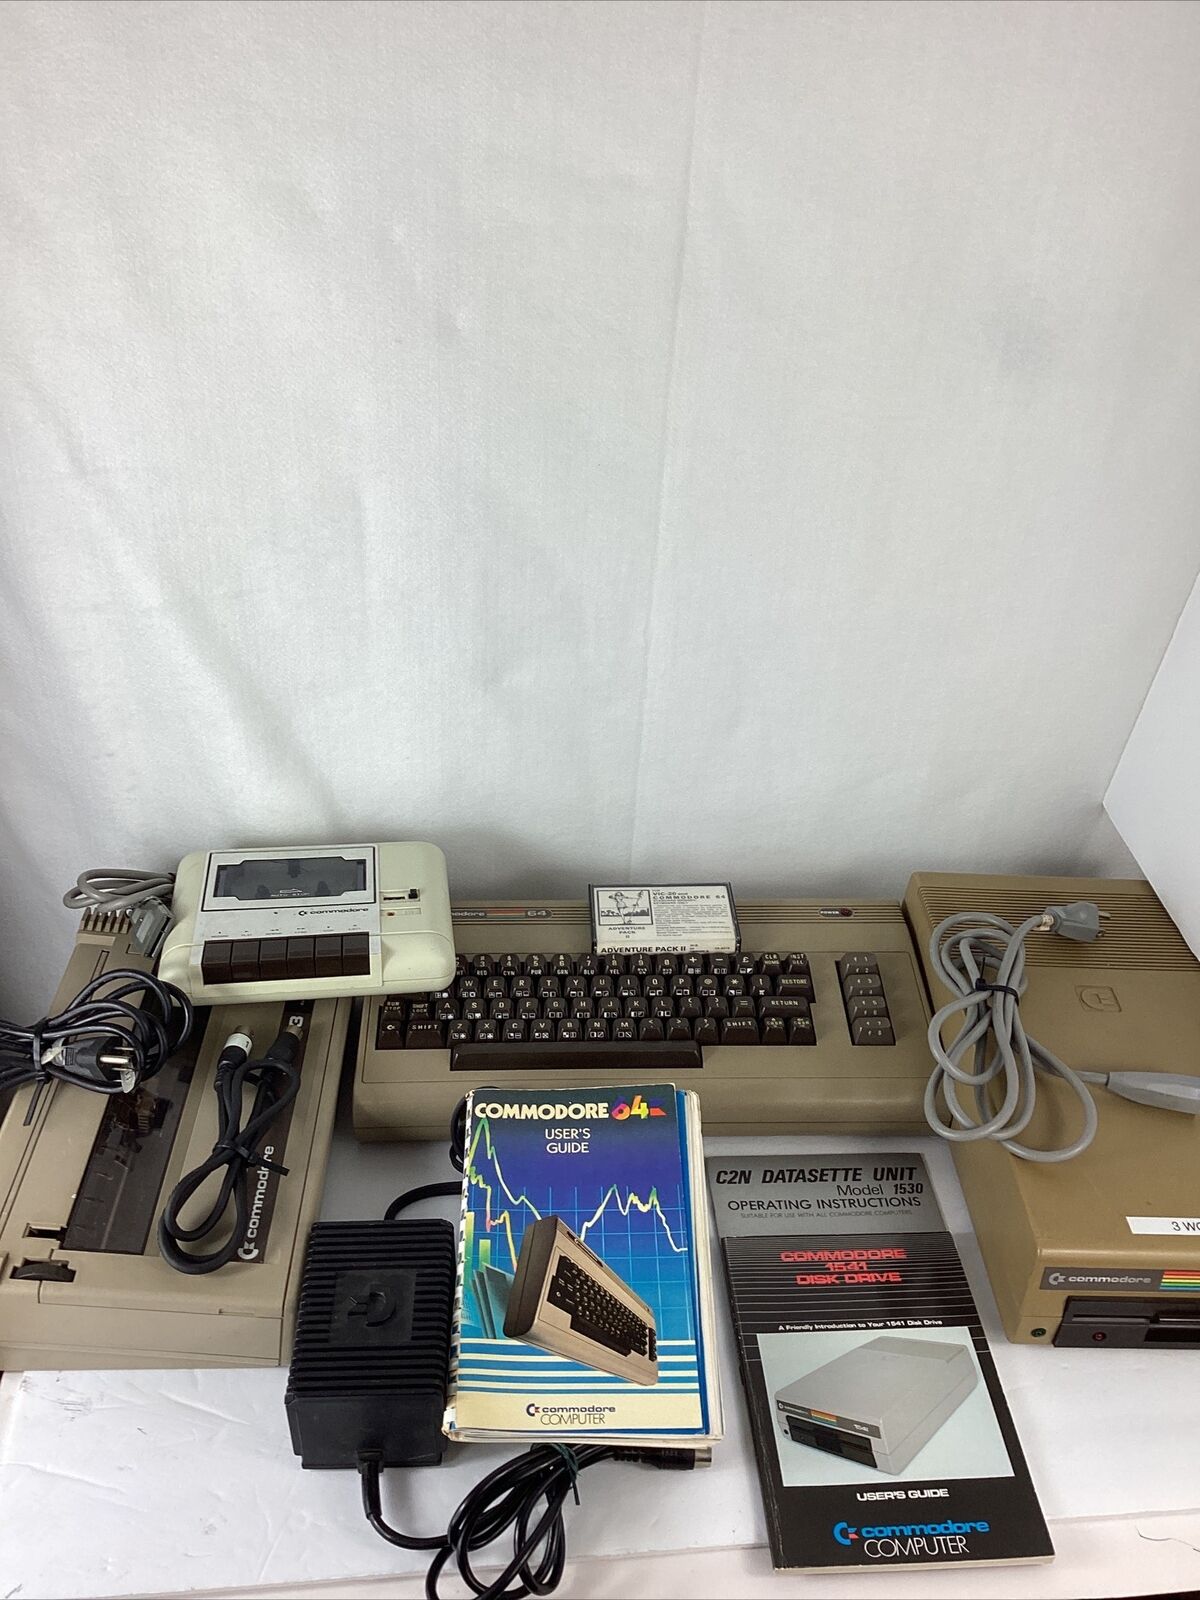 Commodore 64, 1541 Disk Drive, MPS803 Printer, C2N Cassette, Manual, PARTS/REPAR